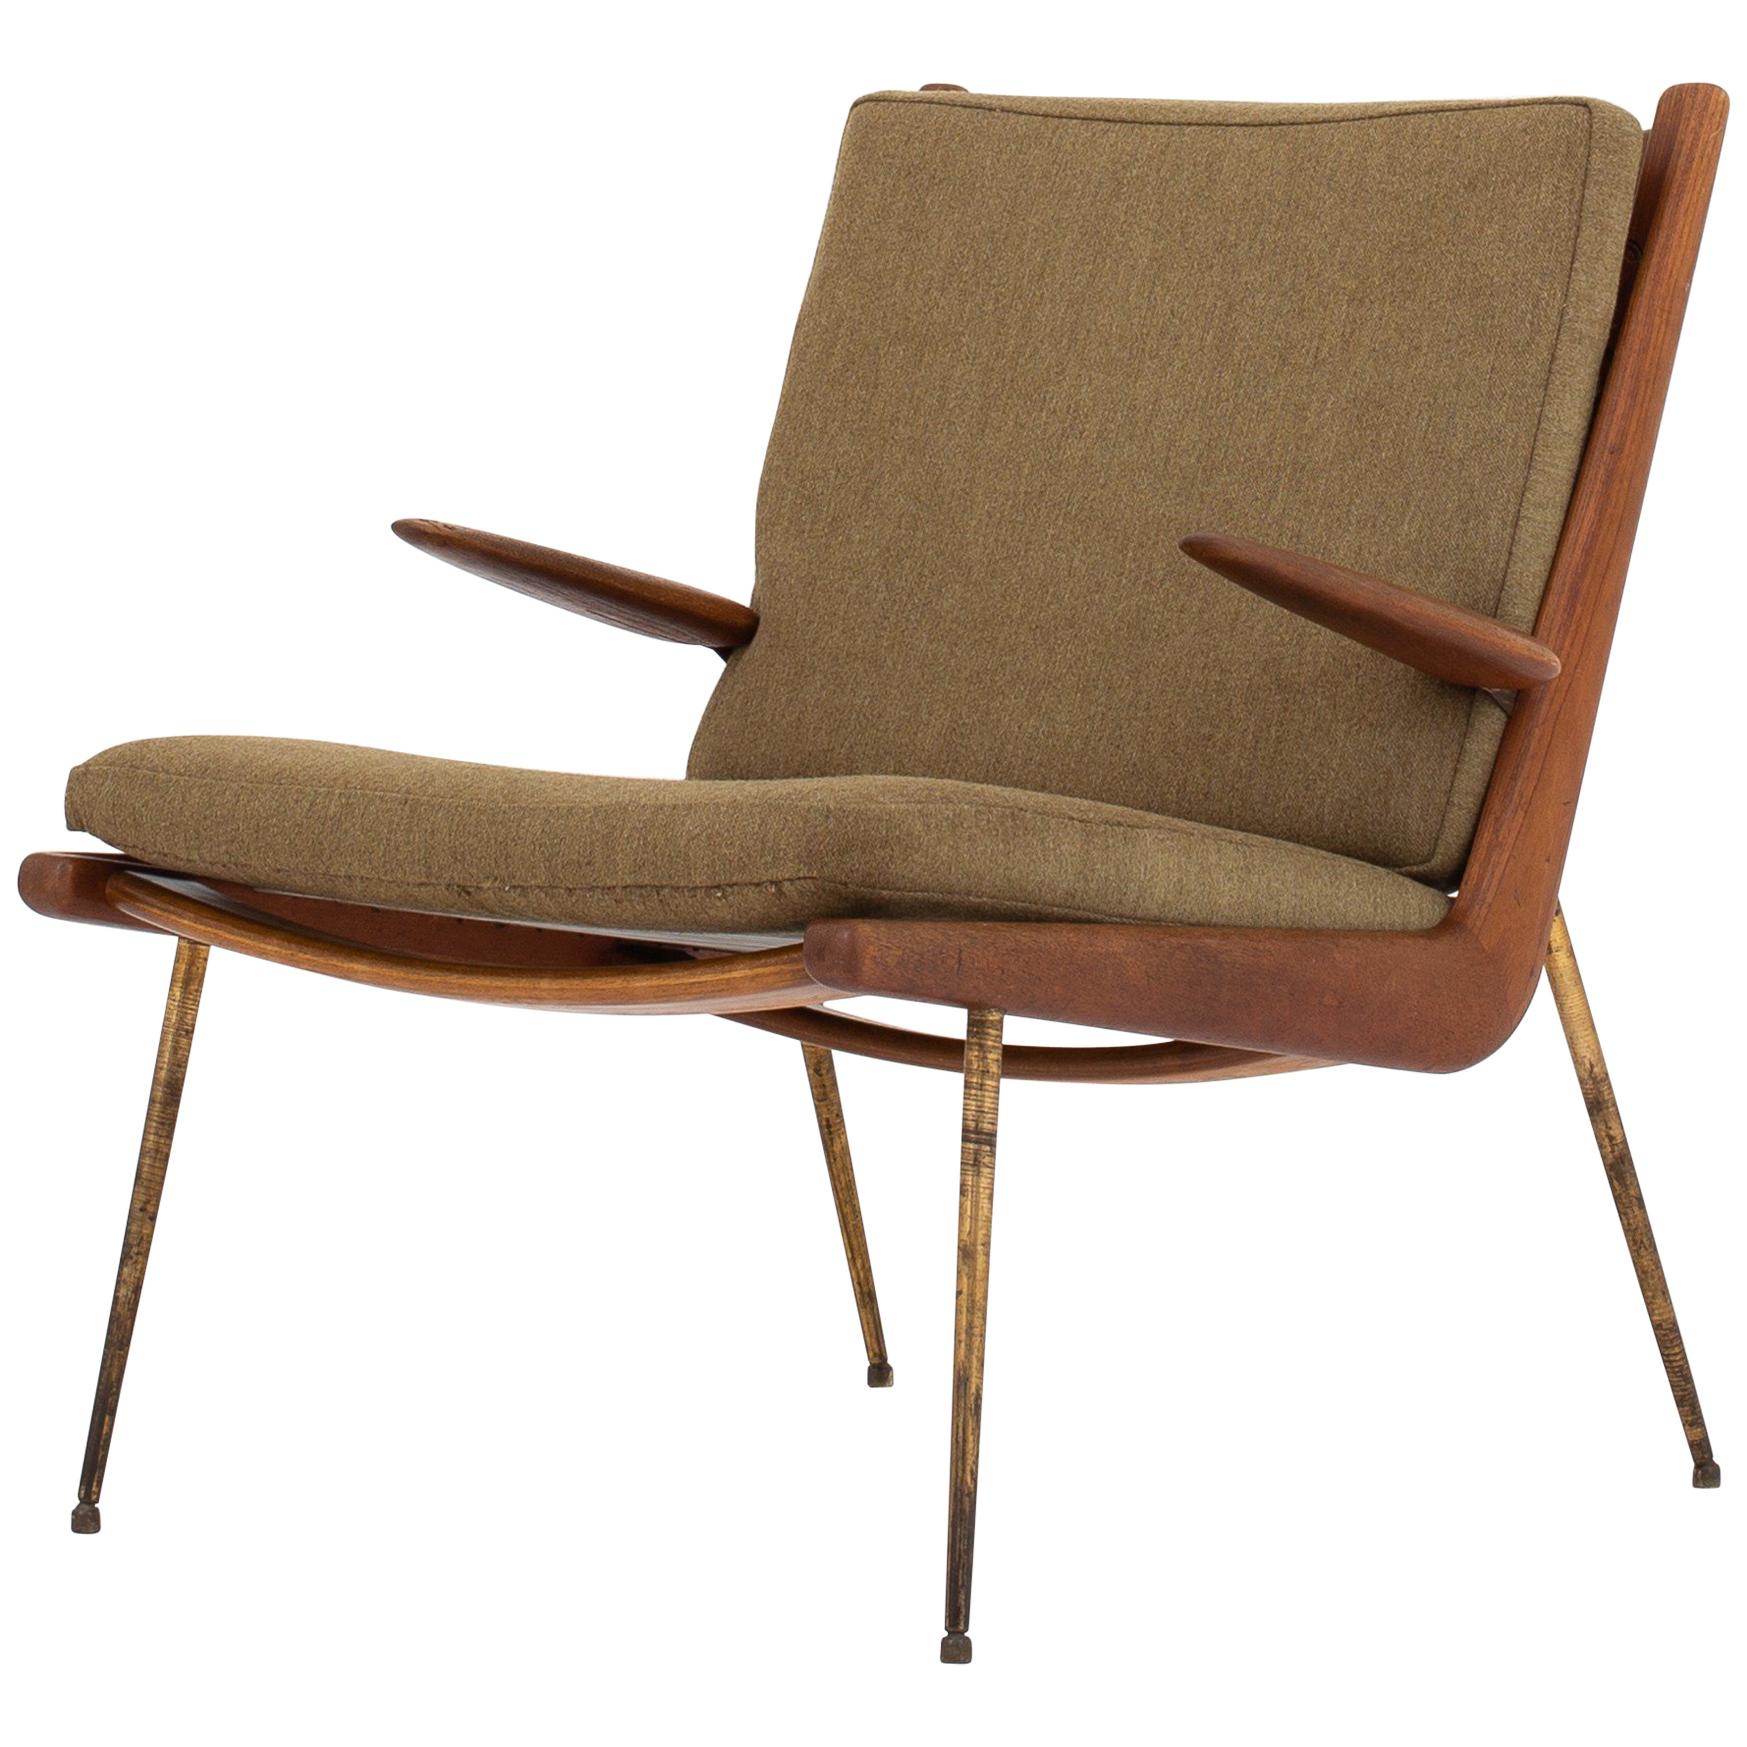 Boomerang Chair by Peter Hvidt / Orla M. Mølgaard